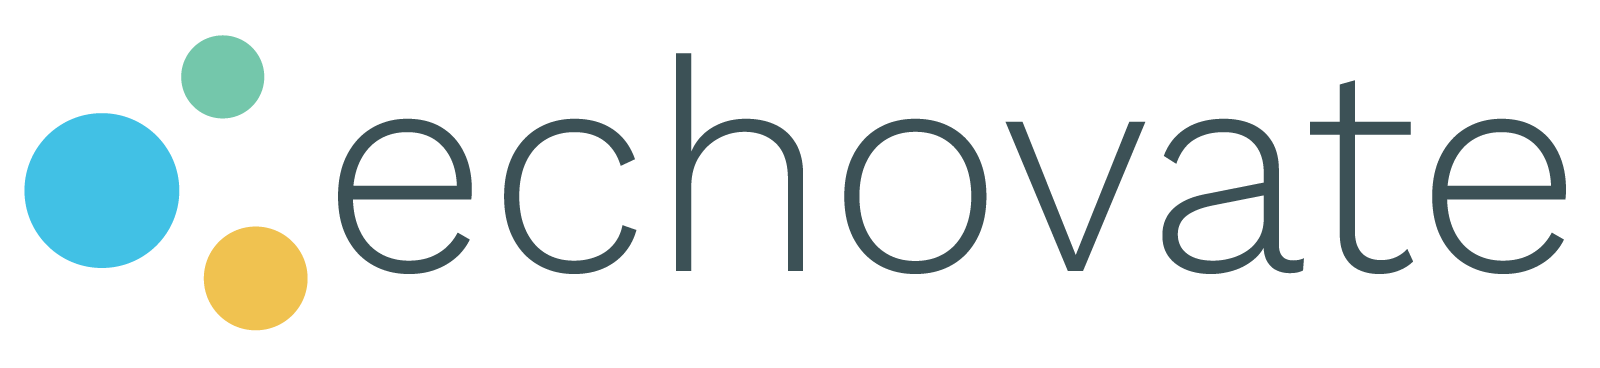 Echovate_Logo